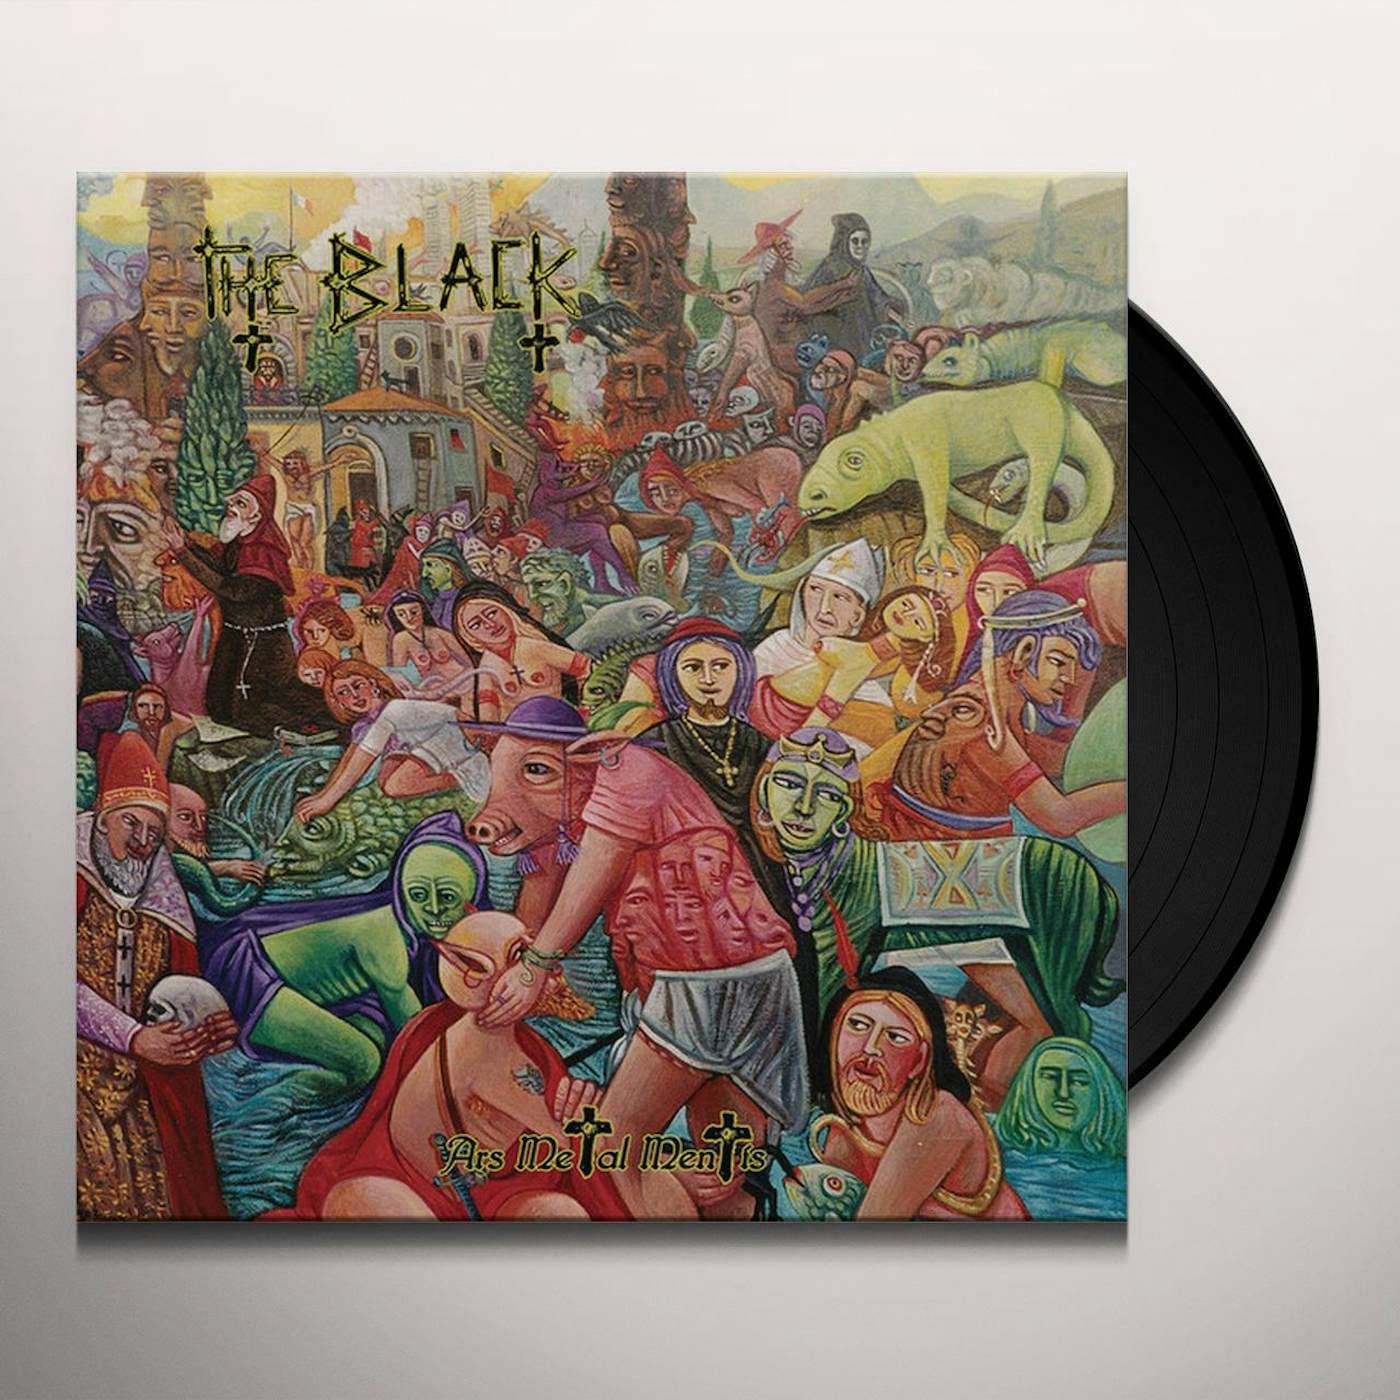 Black Ars Metal Mentis Vinyl Record